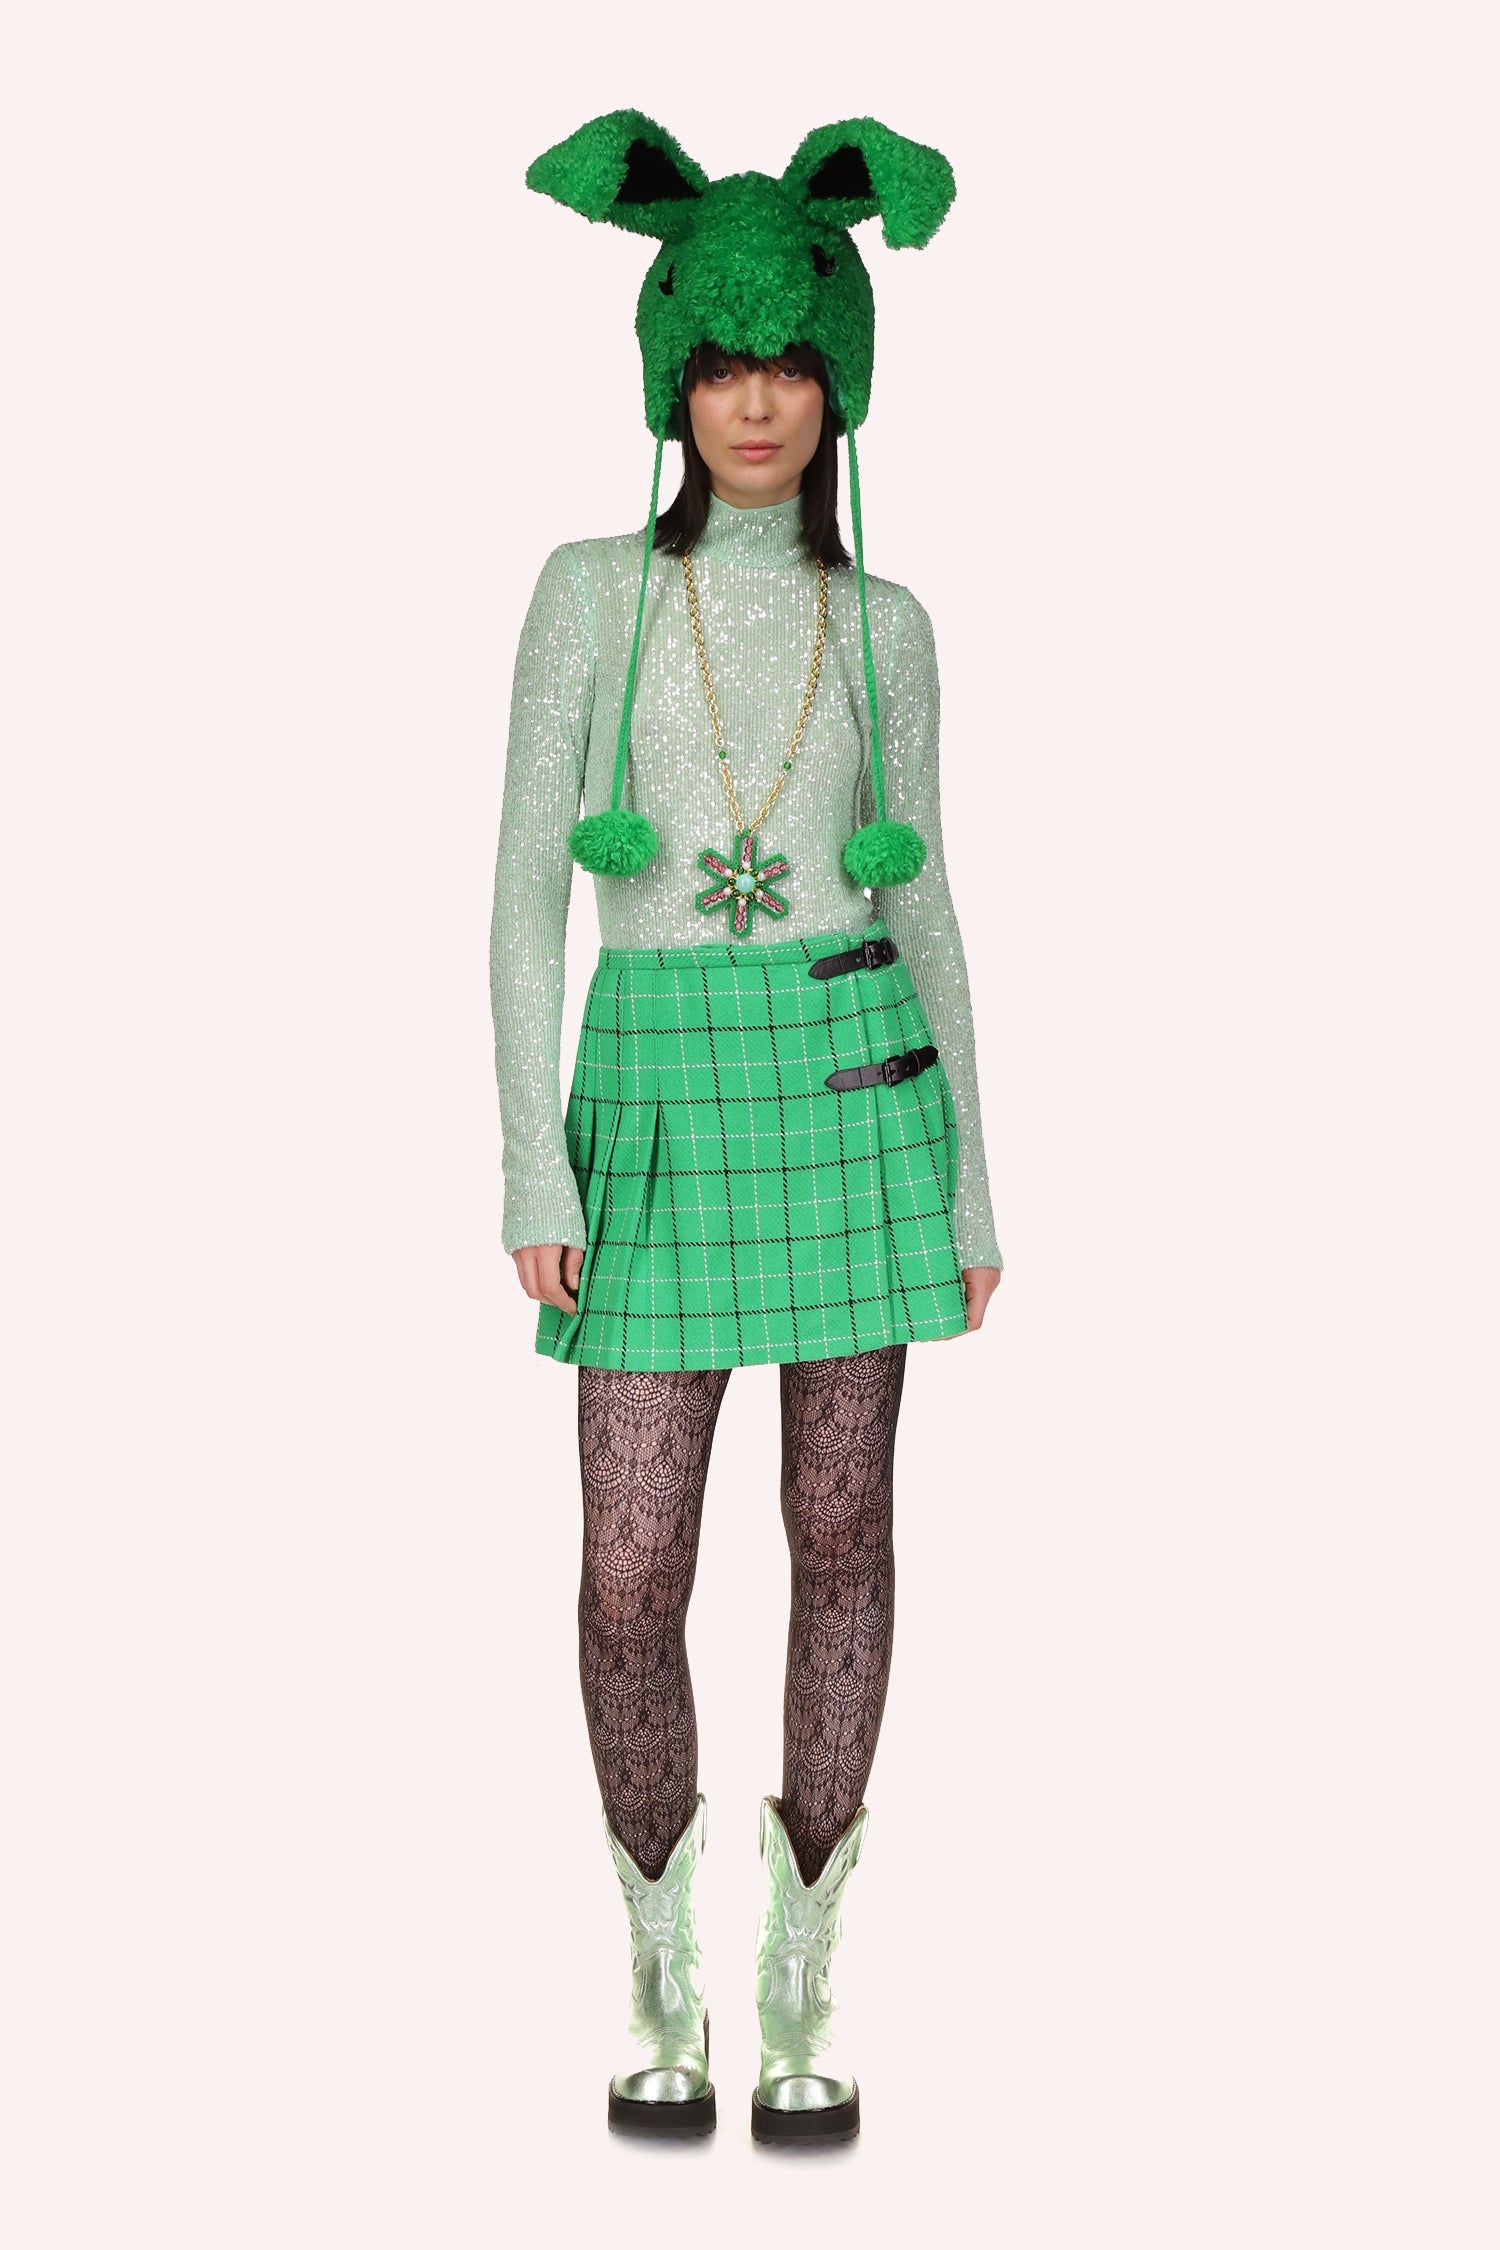 Mini skirt, Irish green, pattern of dark green and white squares, left side of the skirt 2 black buckles pleated under 